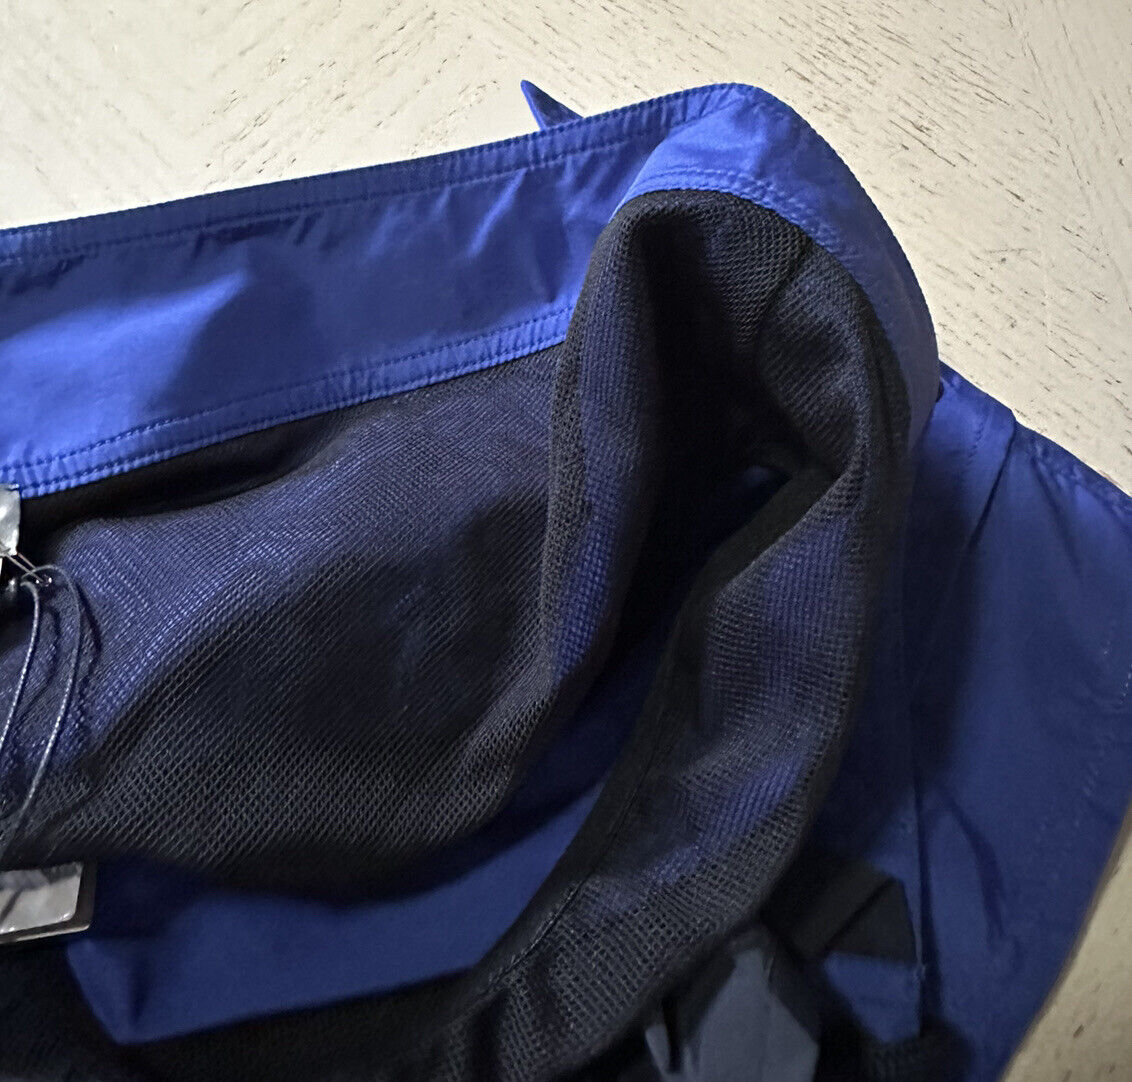 NWT $790 Шорты для плавания DIOR на шнурке, синие, размер XL